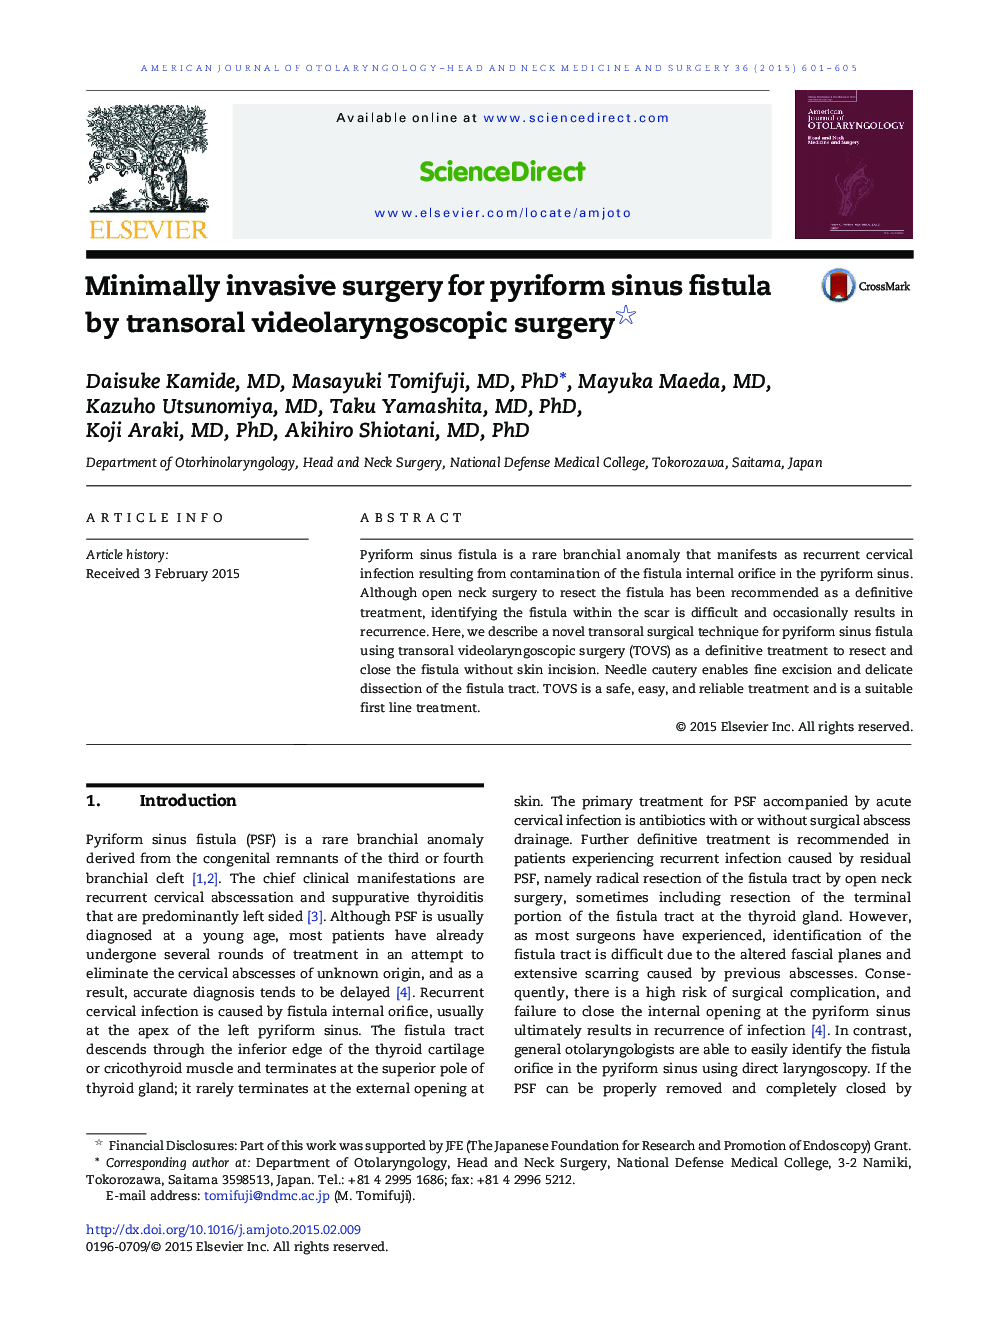 Minimally invasive surgery for pyriform sinus fistula by transoral videolaryngoscopic surgery 